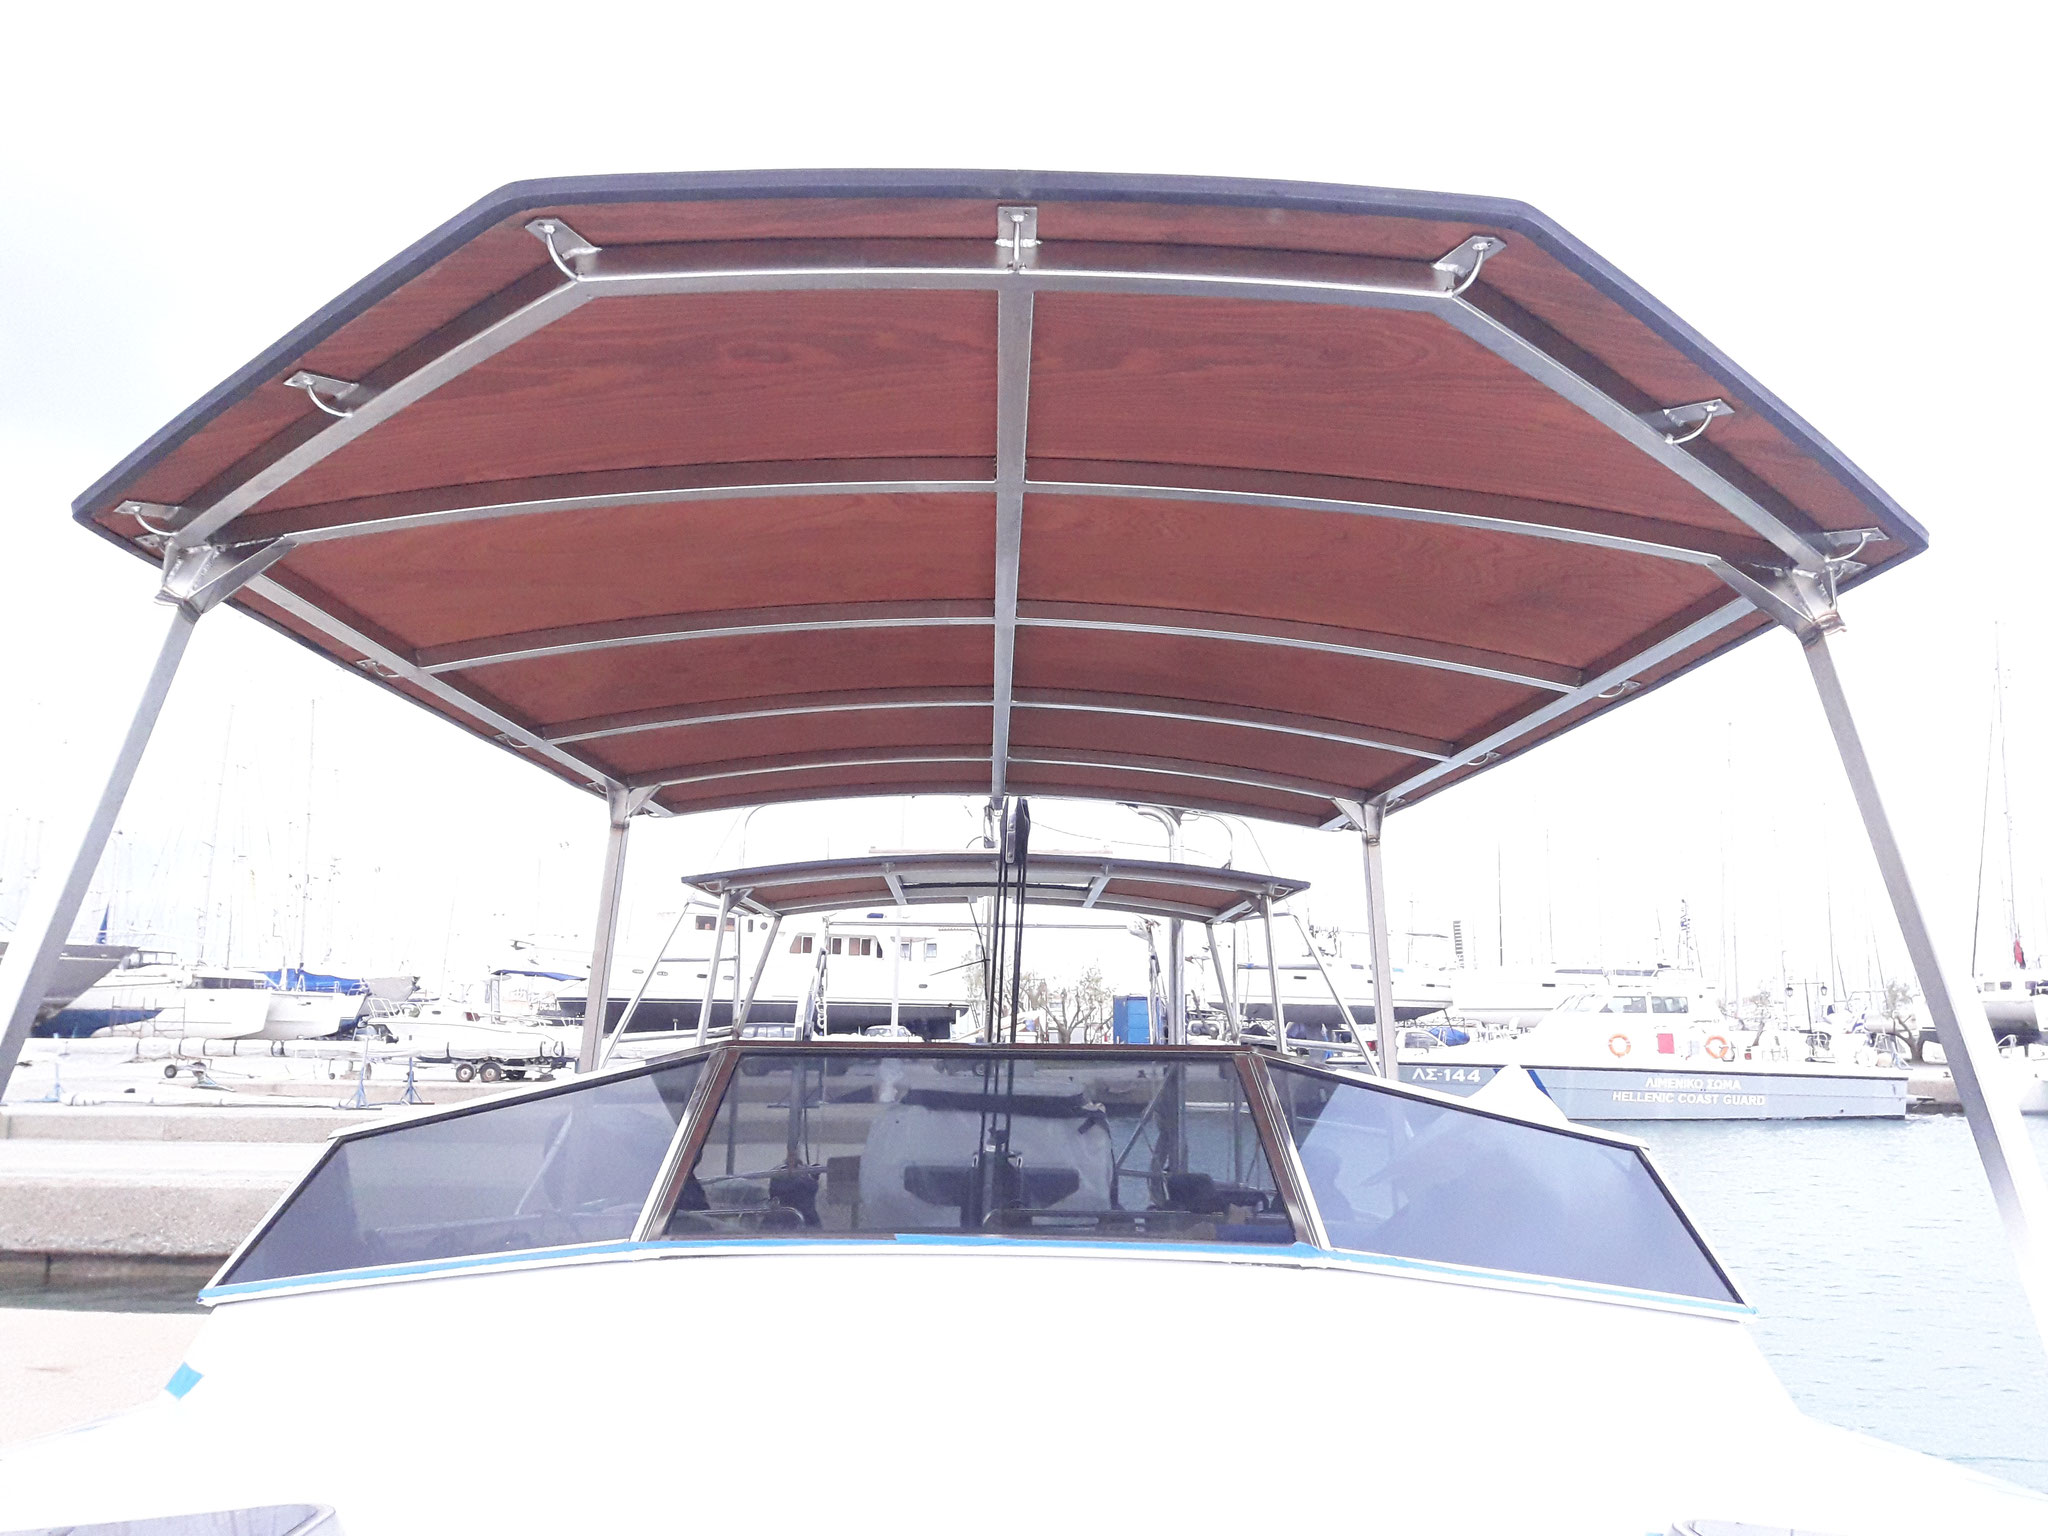 Yacht-Dach aus V4A-Stahl, Sapelli-Mahagoni und Alu-Core-Platten, Griechenland (Privatkunde)  